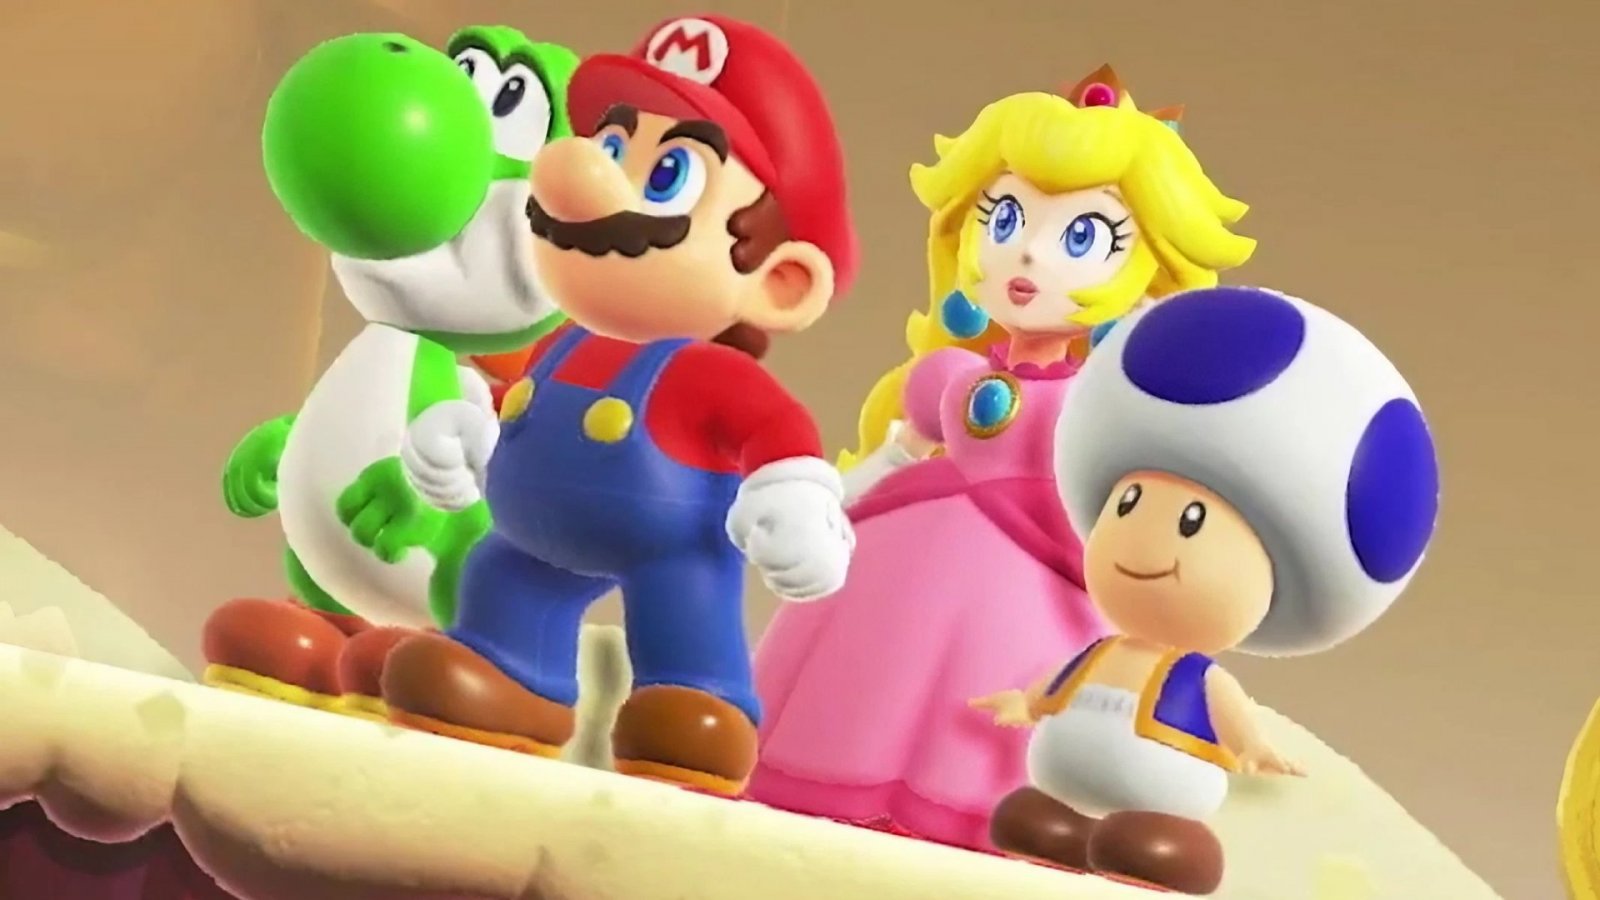 Classifica giapponese, Super Mario Bros. Wonder torna al comando